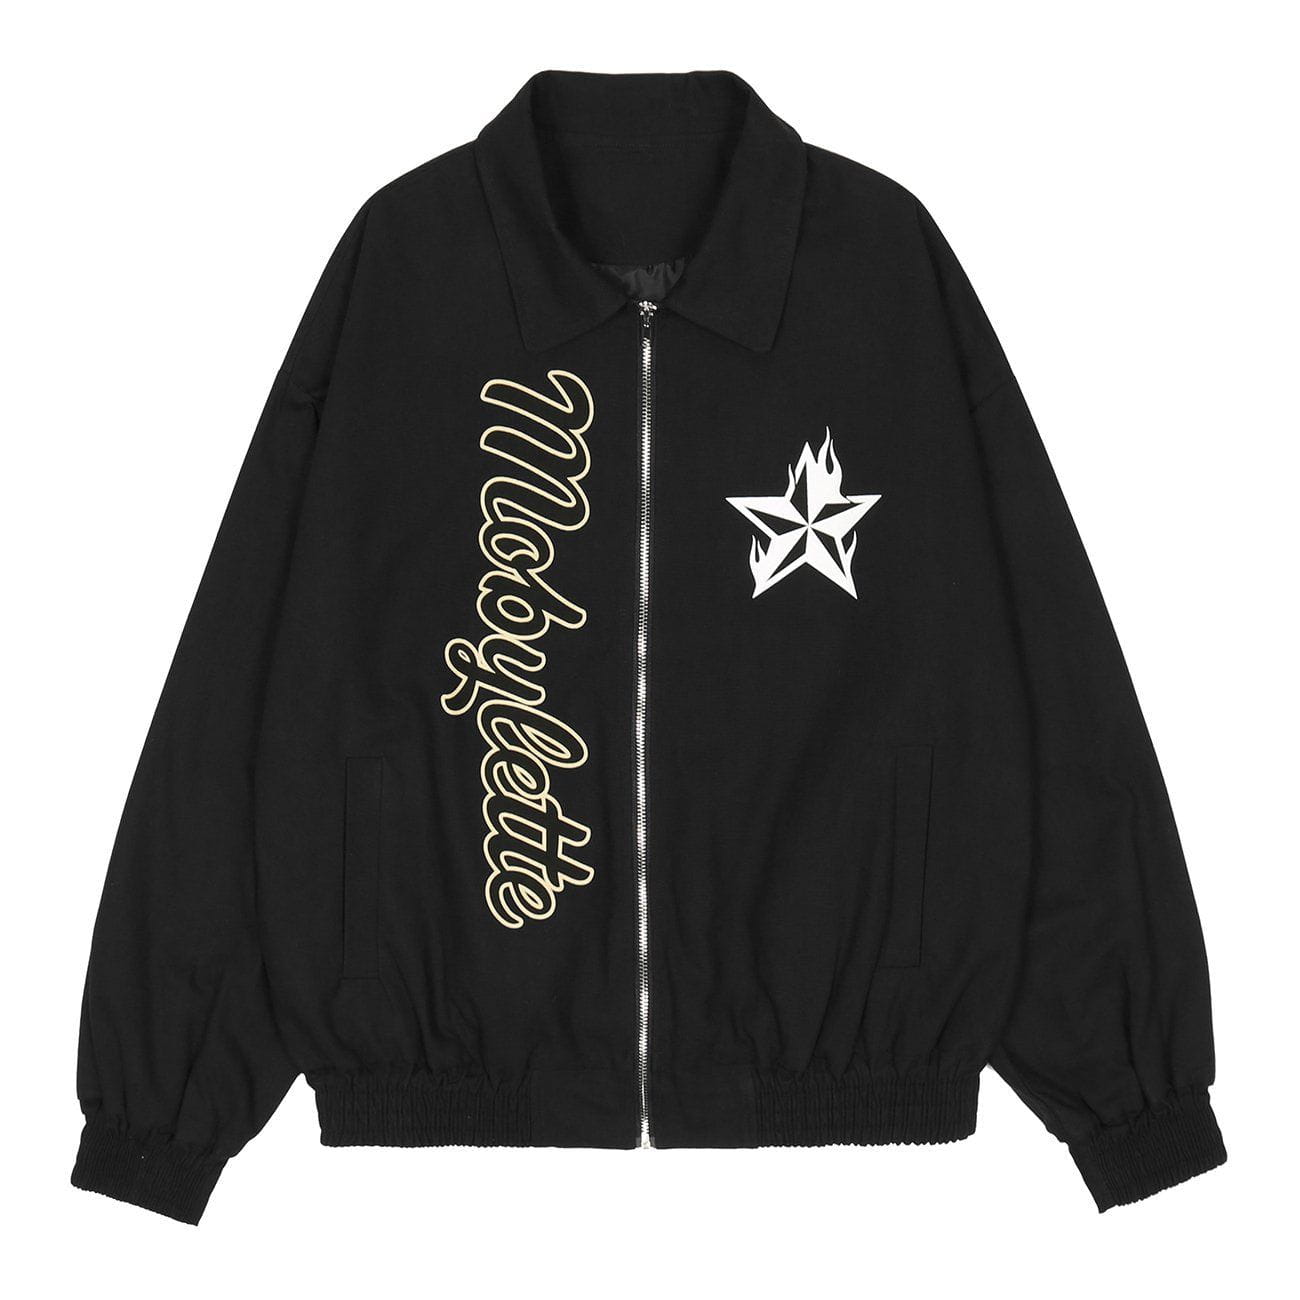 Eprezzy® - Pentagram Letter Embroidery Jacket Streetwear Fashion - eprezzy.com